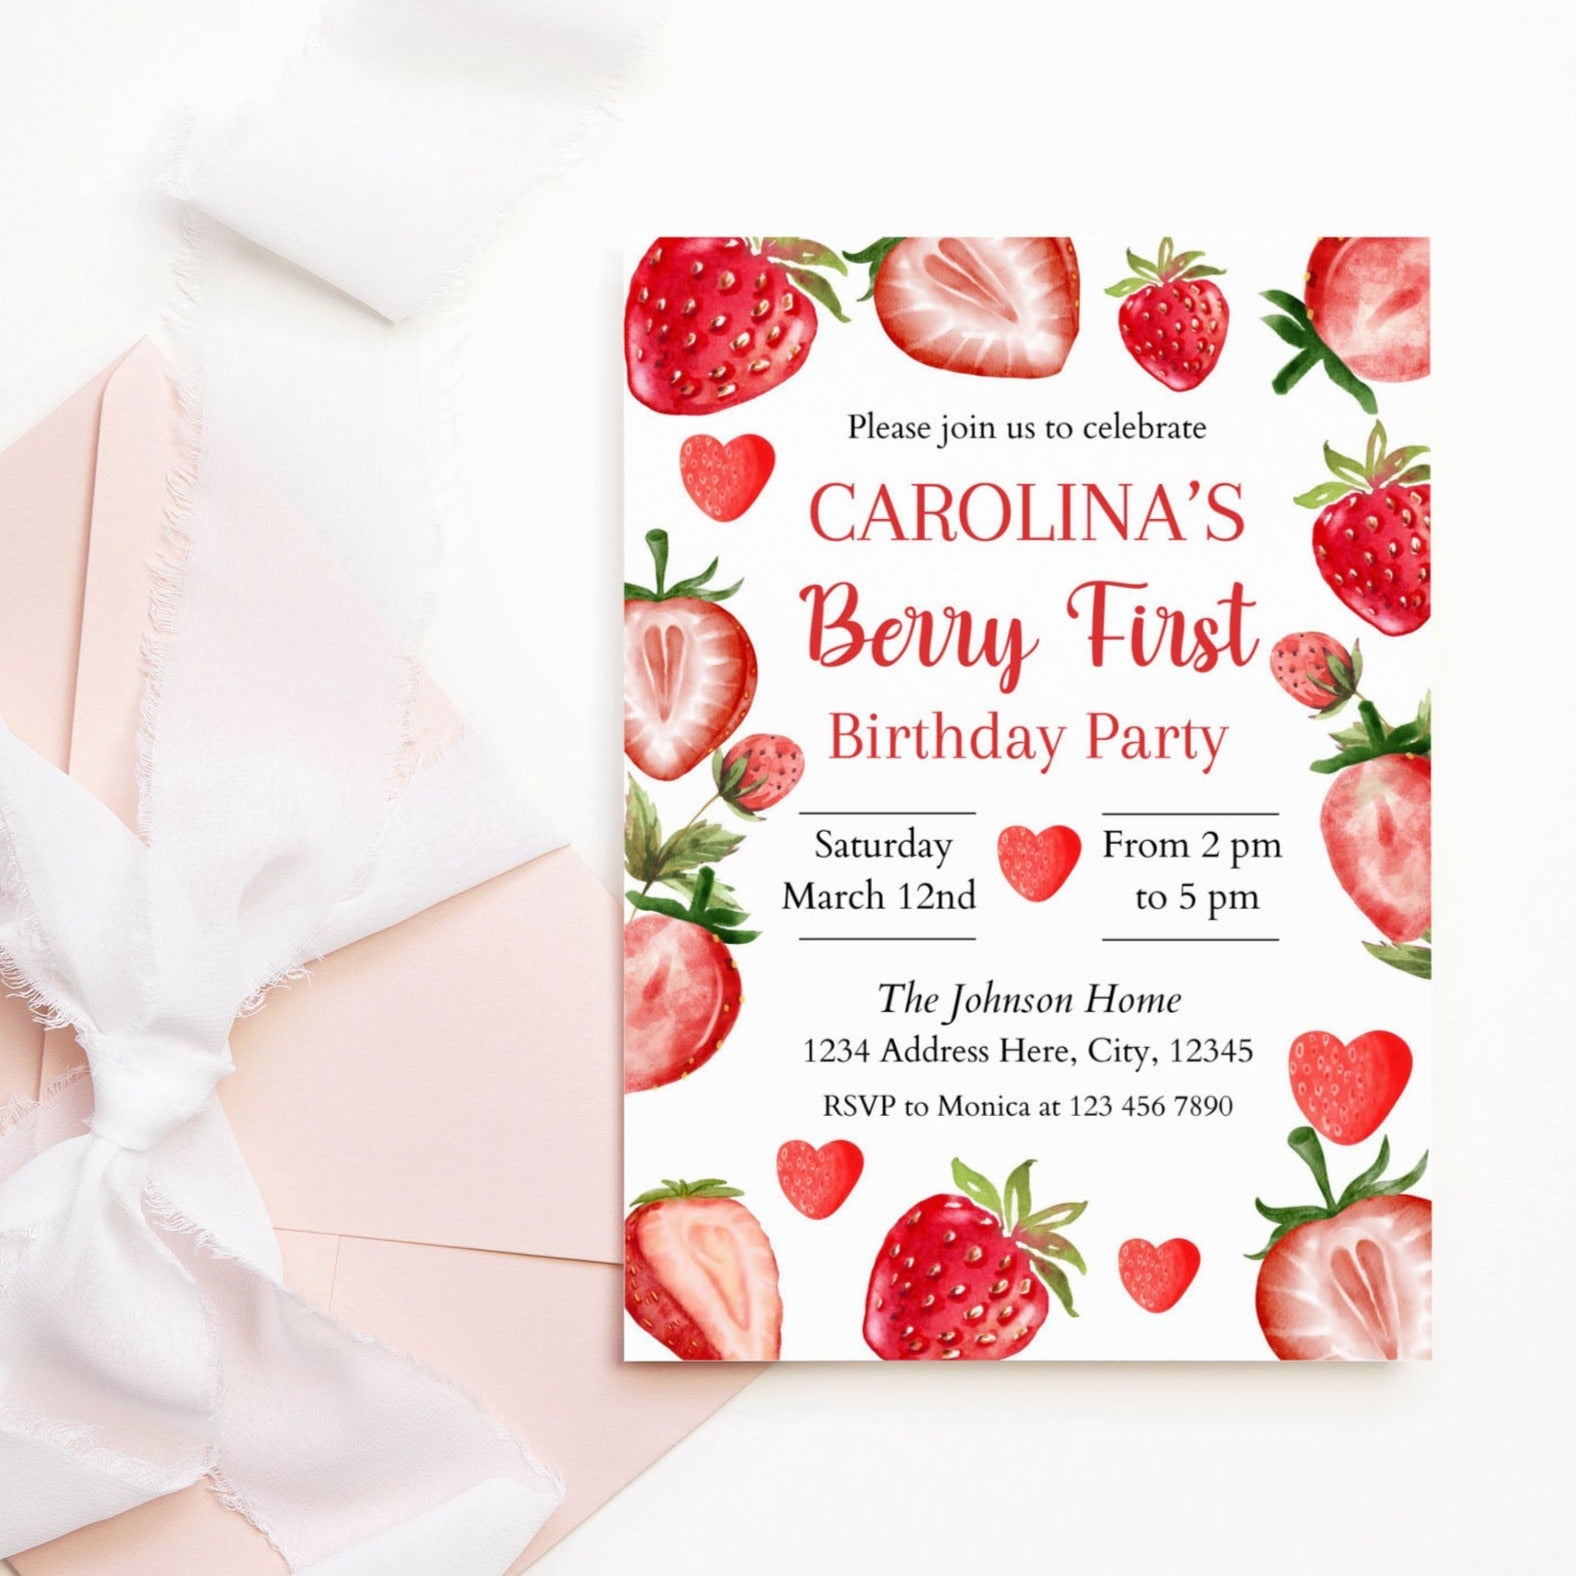 Customize your strawberry birthday invite in Canva